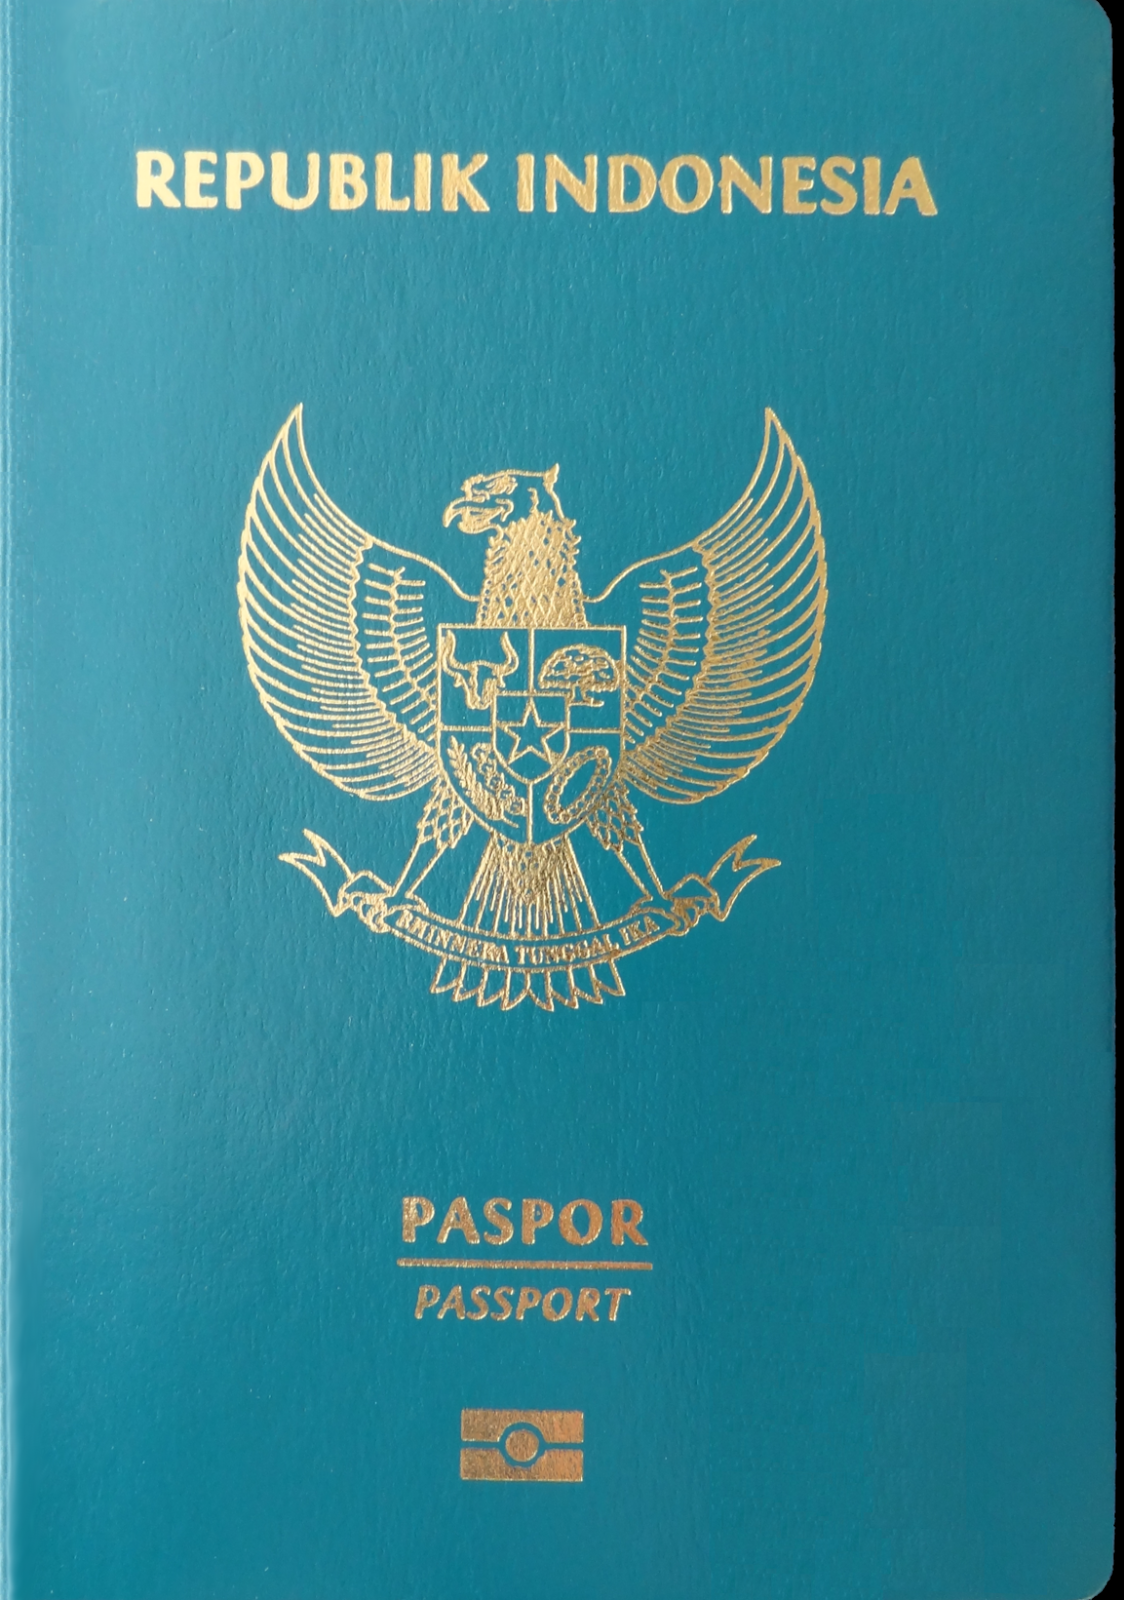 Indonesian passport cover